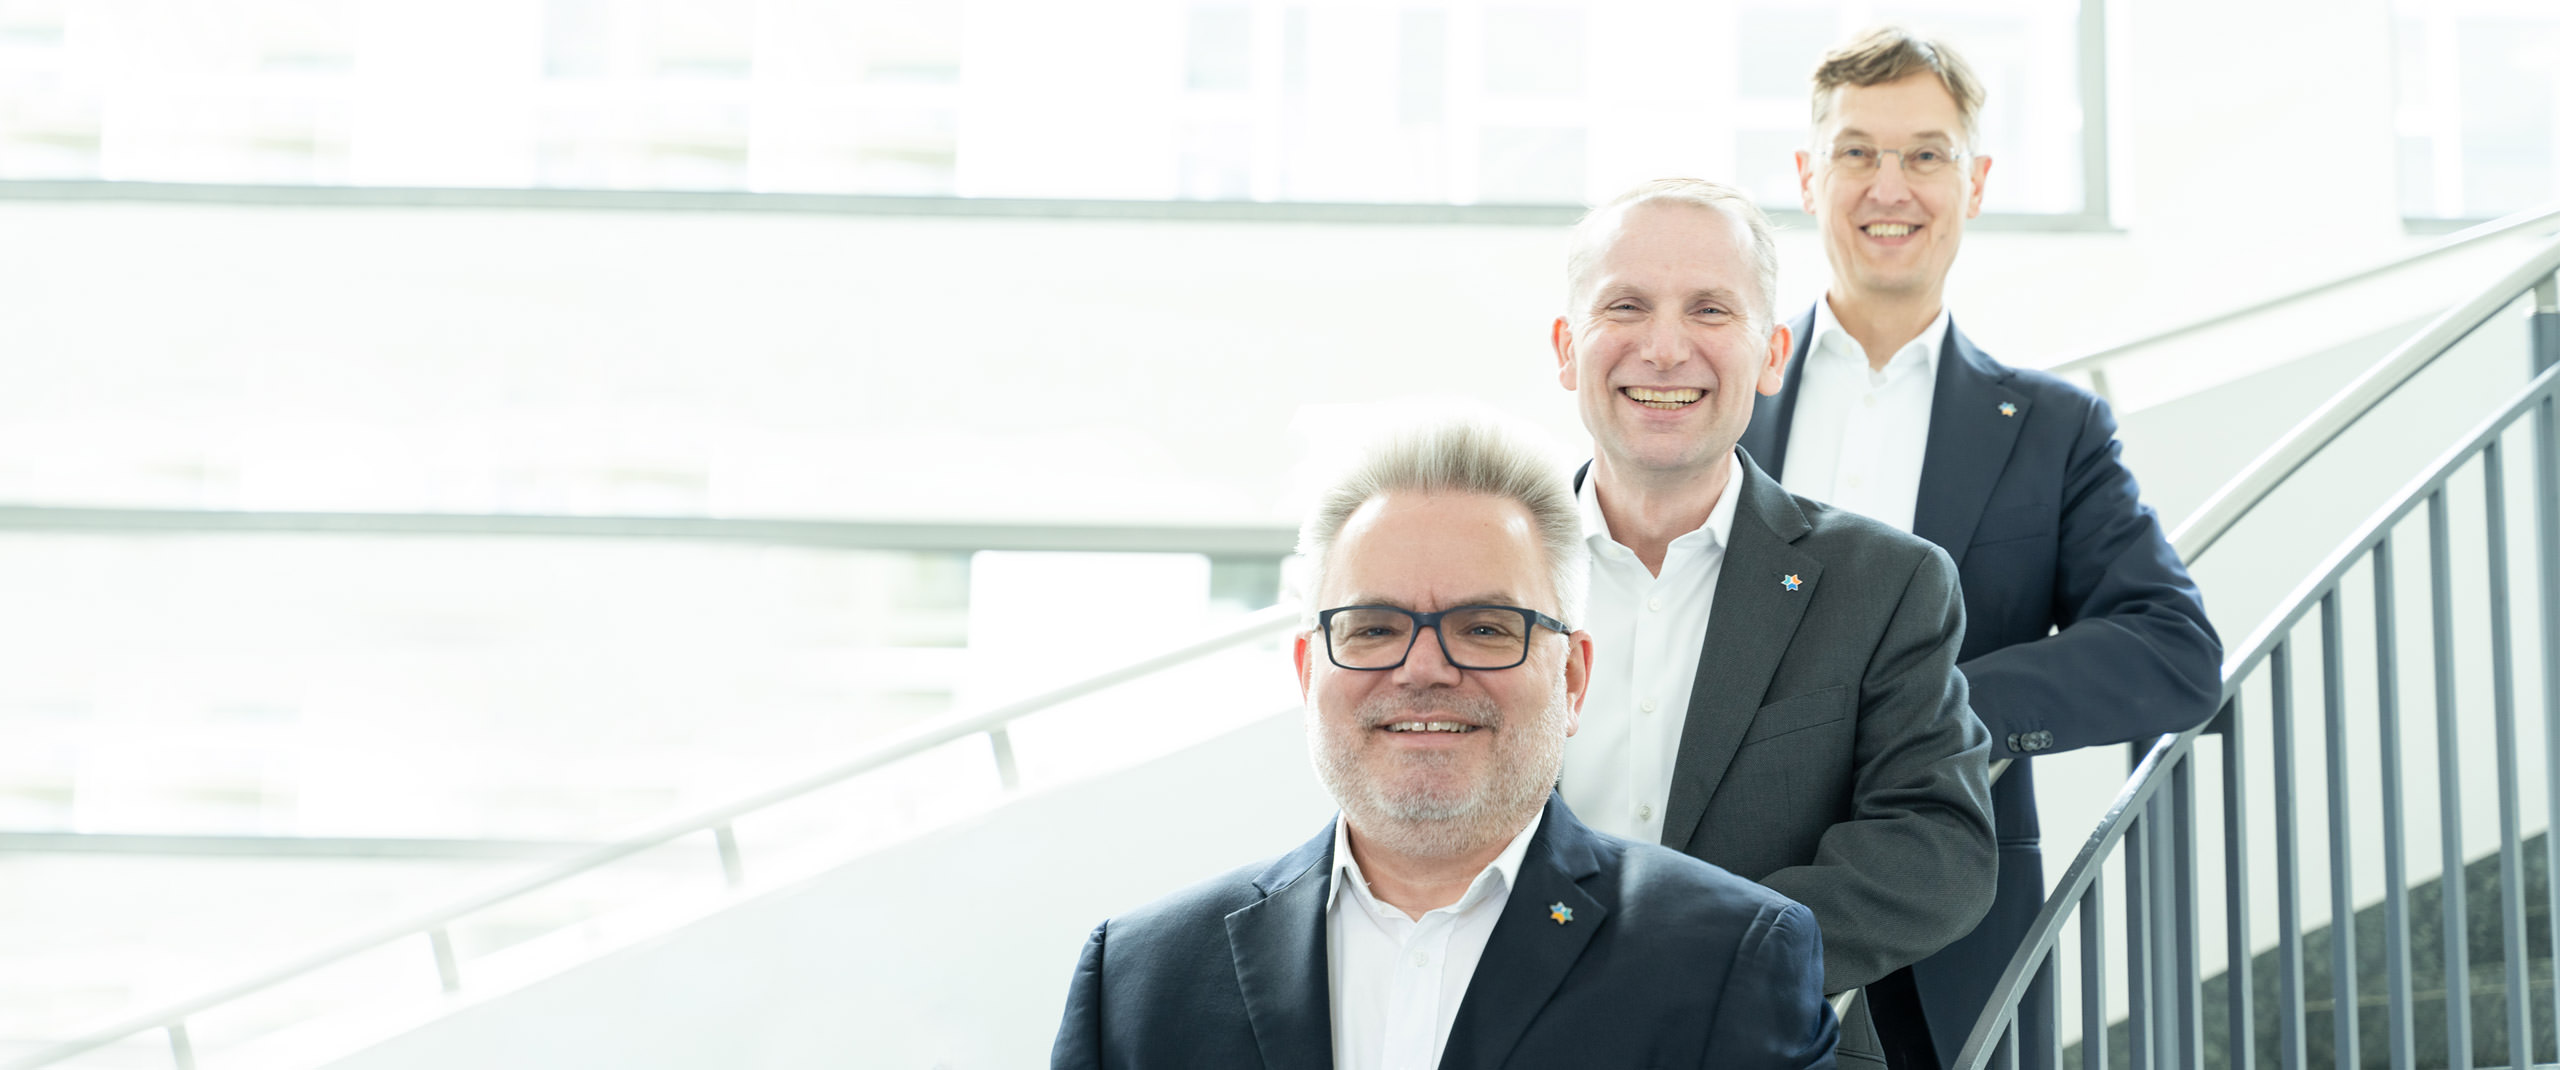 LEFT TO RIGHT: TIMETOACT GROUP's co-CEOs Felix Binsack and Hermann Ballé with CFO Frank Fuchs.